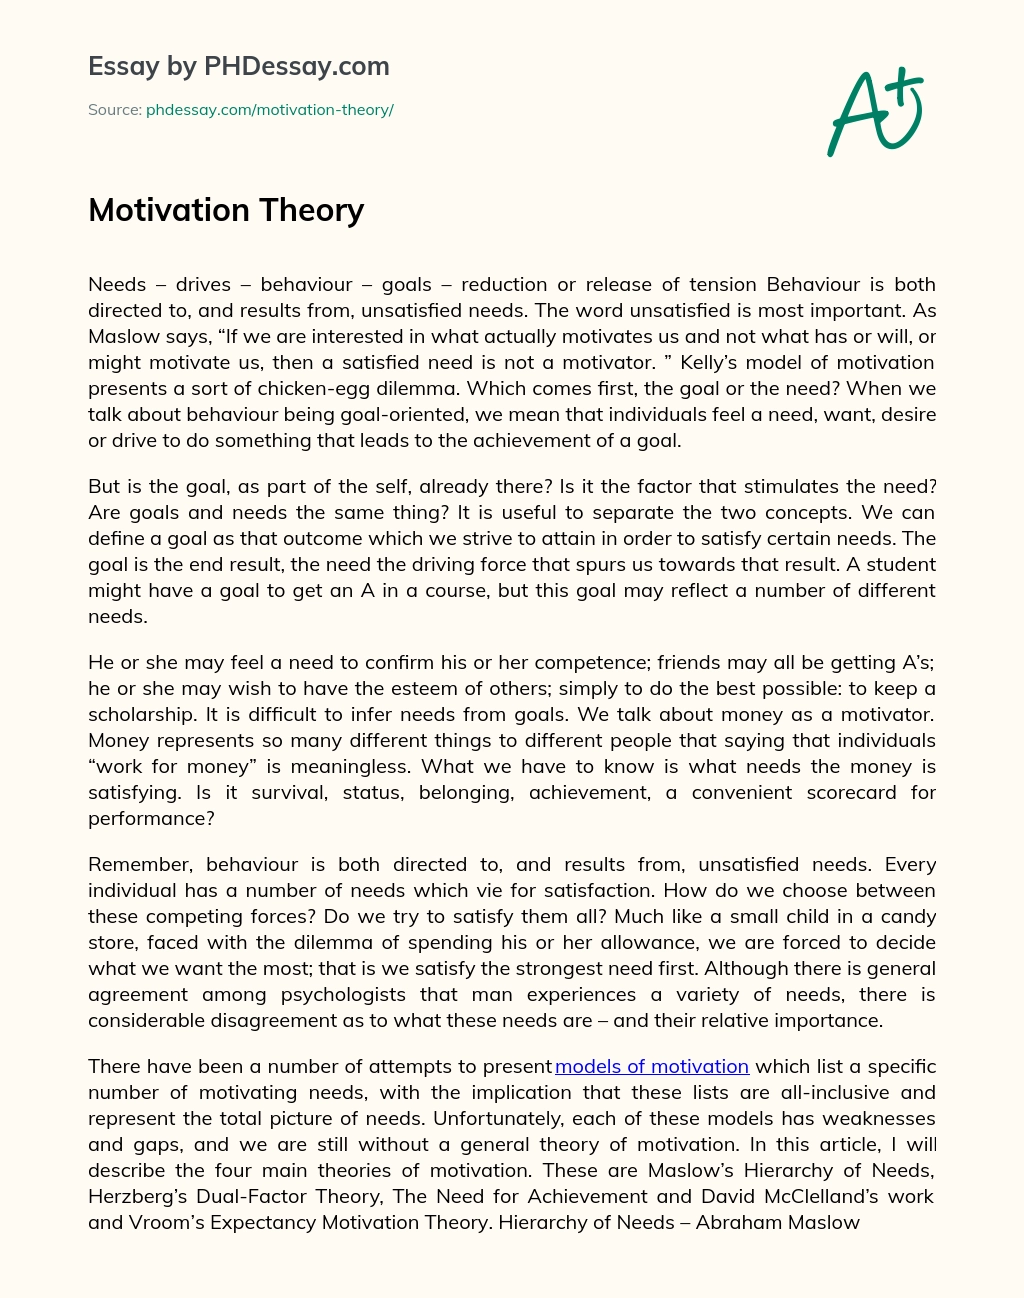 theory of motivation essay